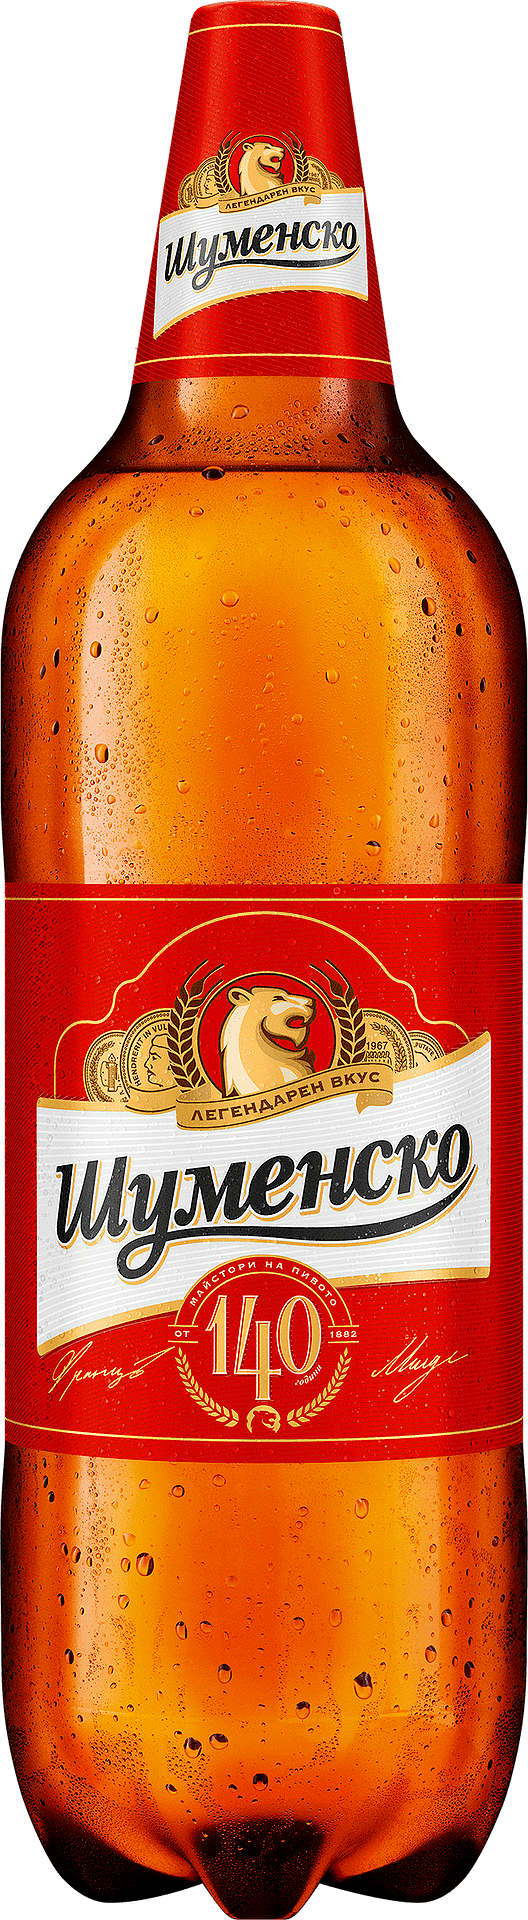 Pivo Shumensko plechovka 500ml